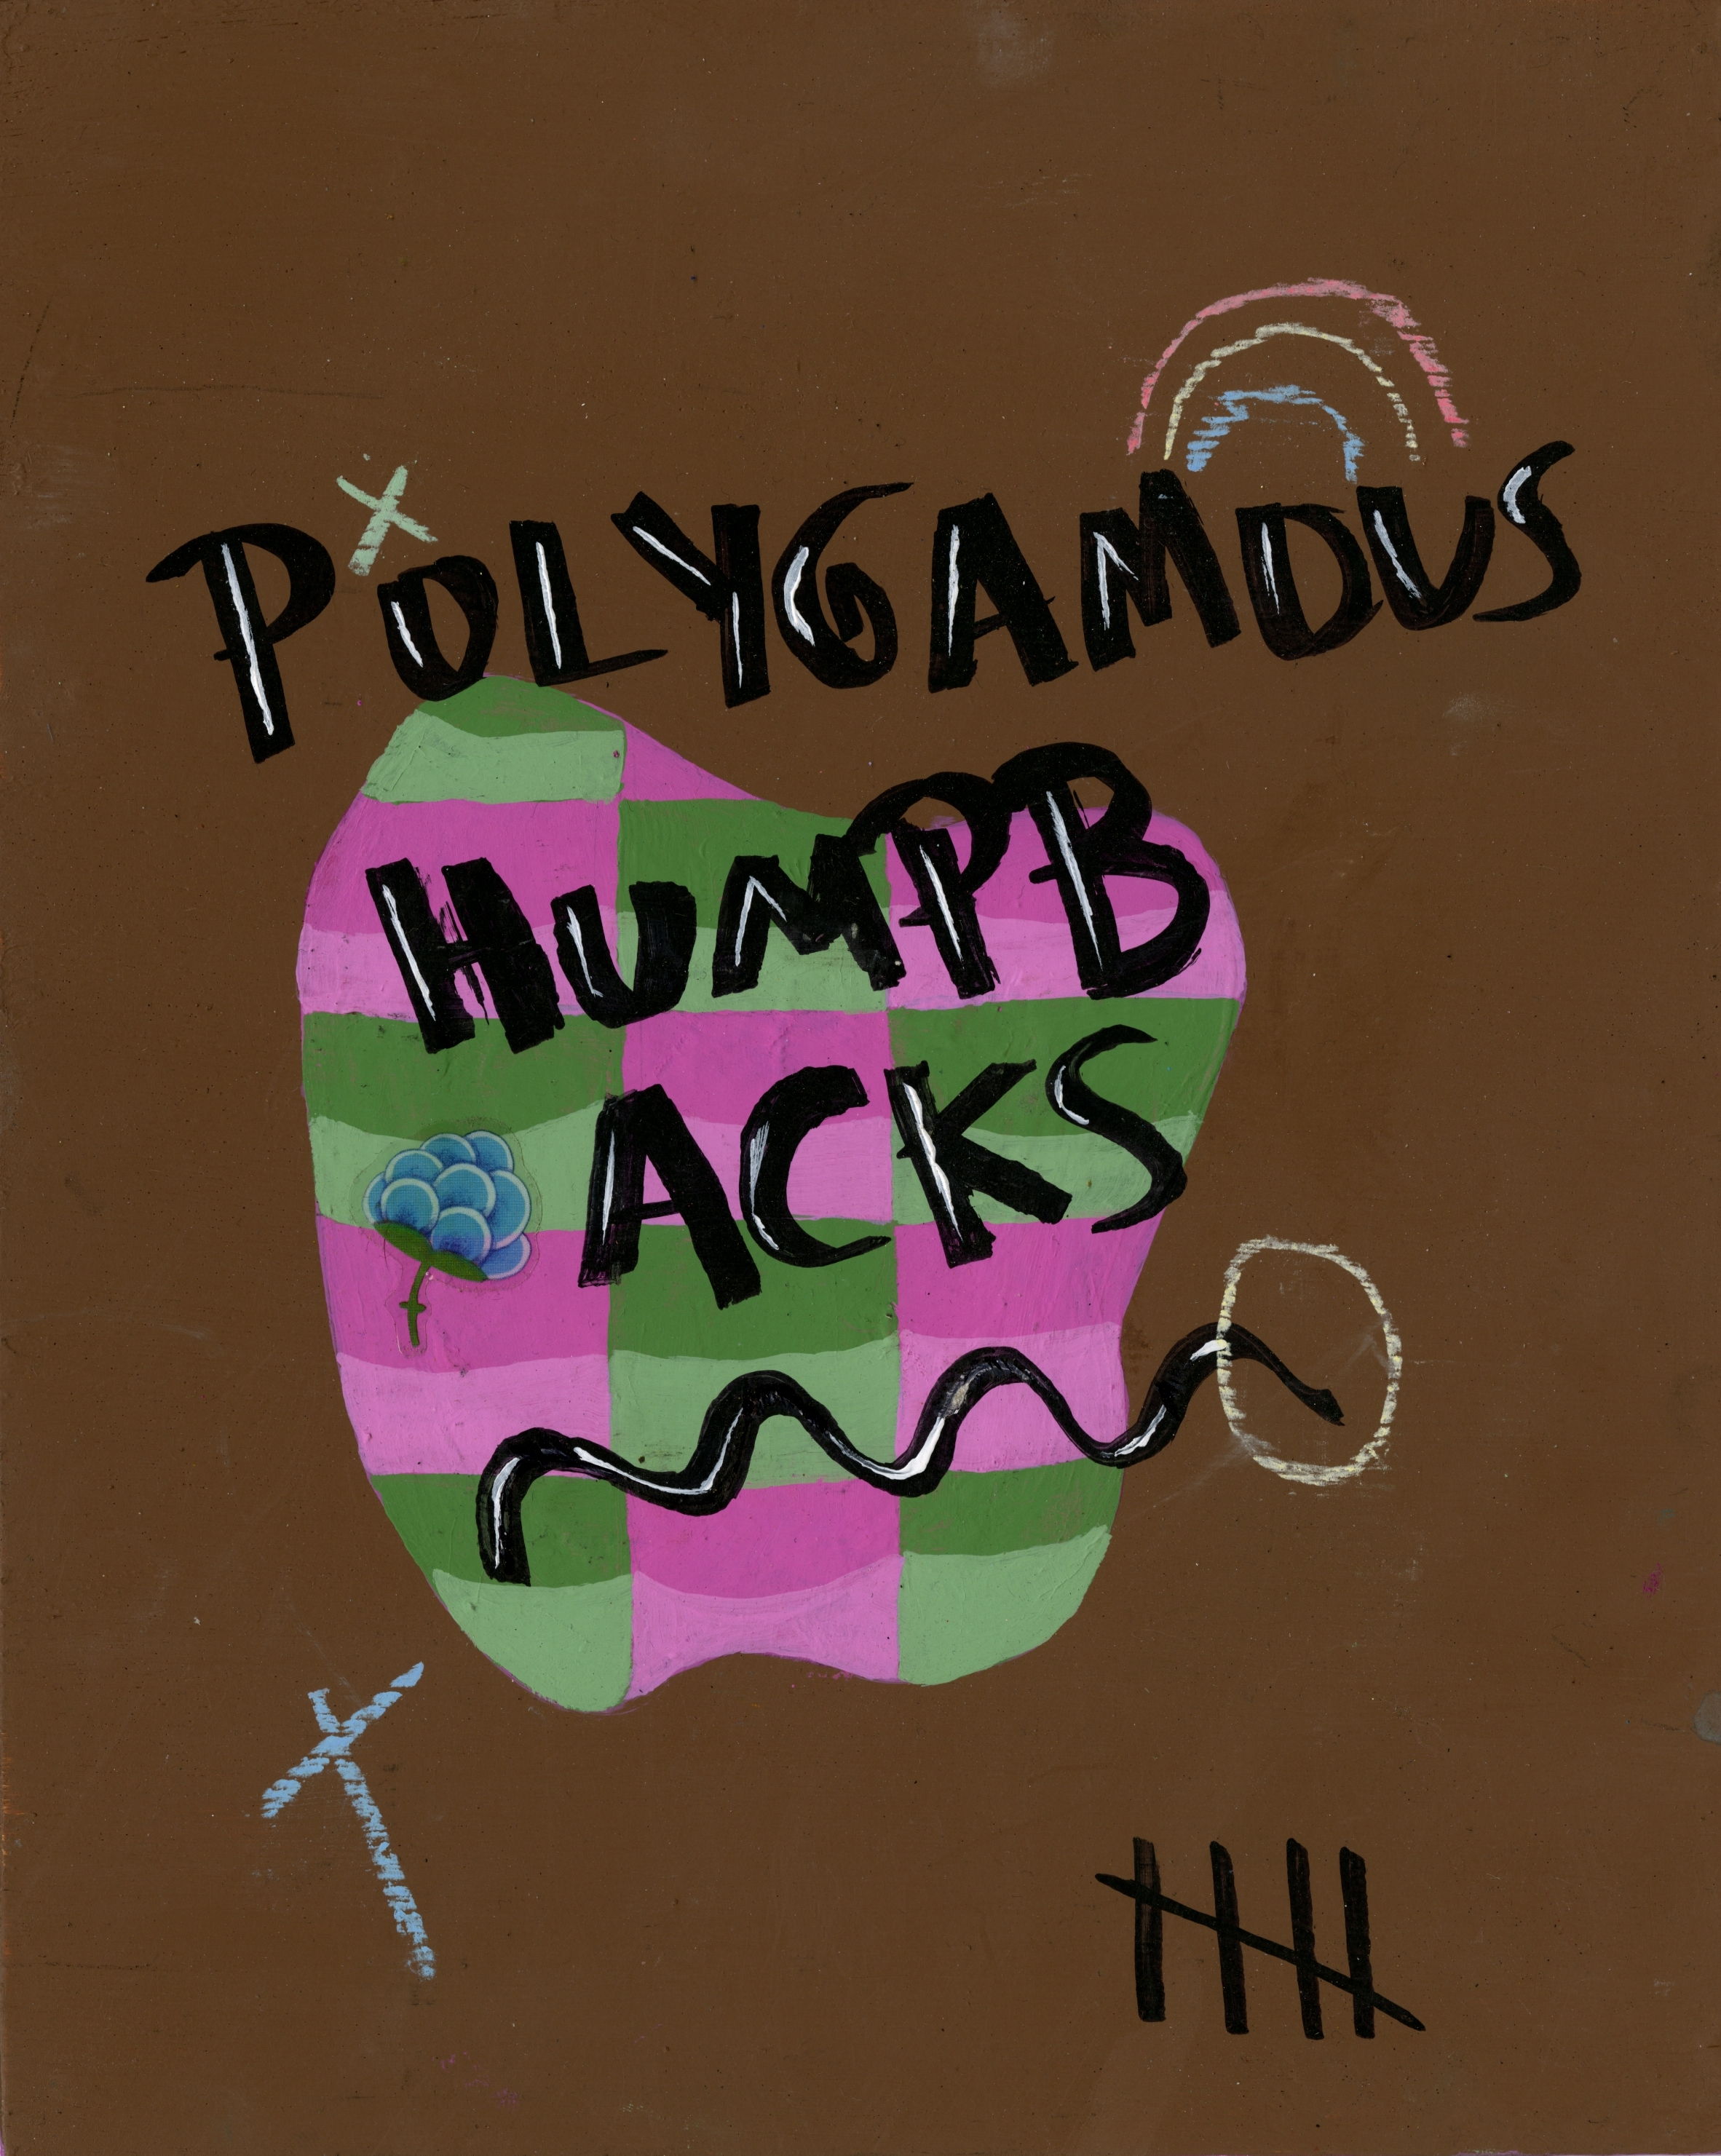 Polygamous Humpbacks